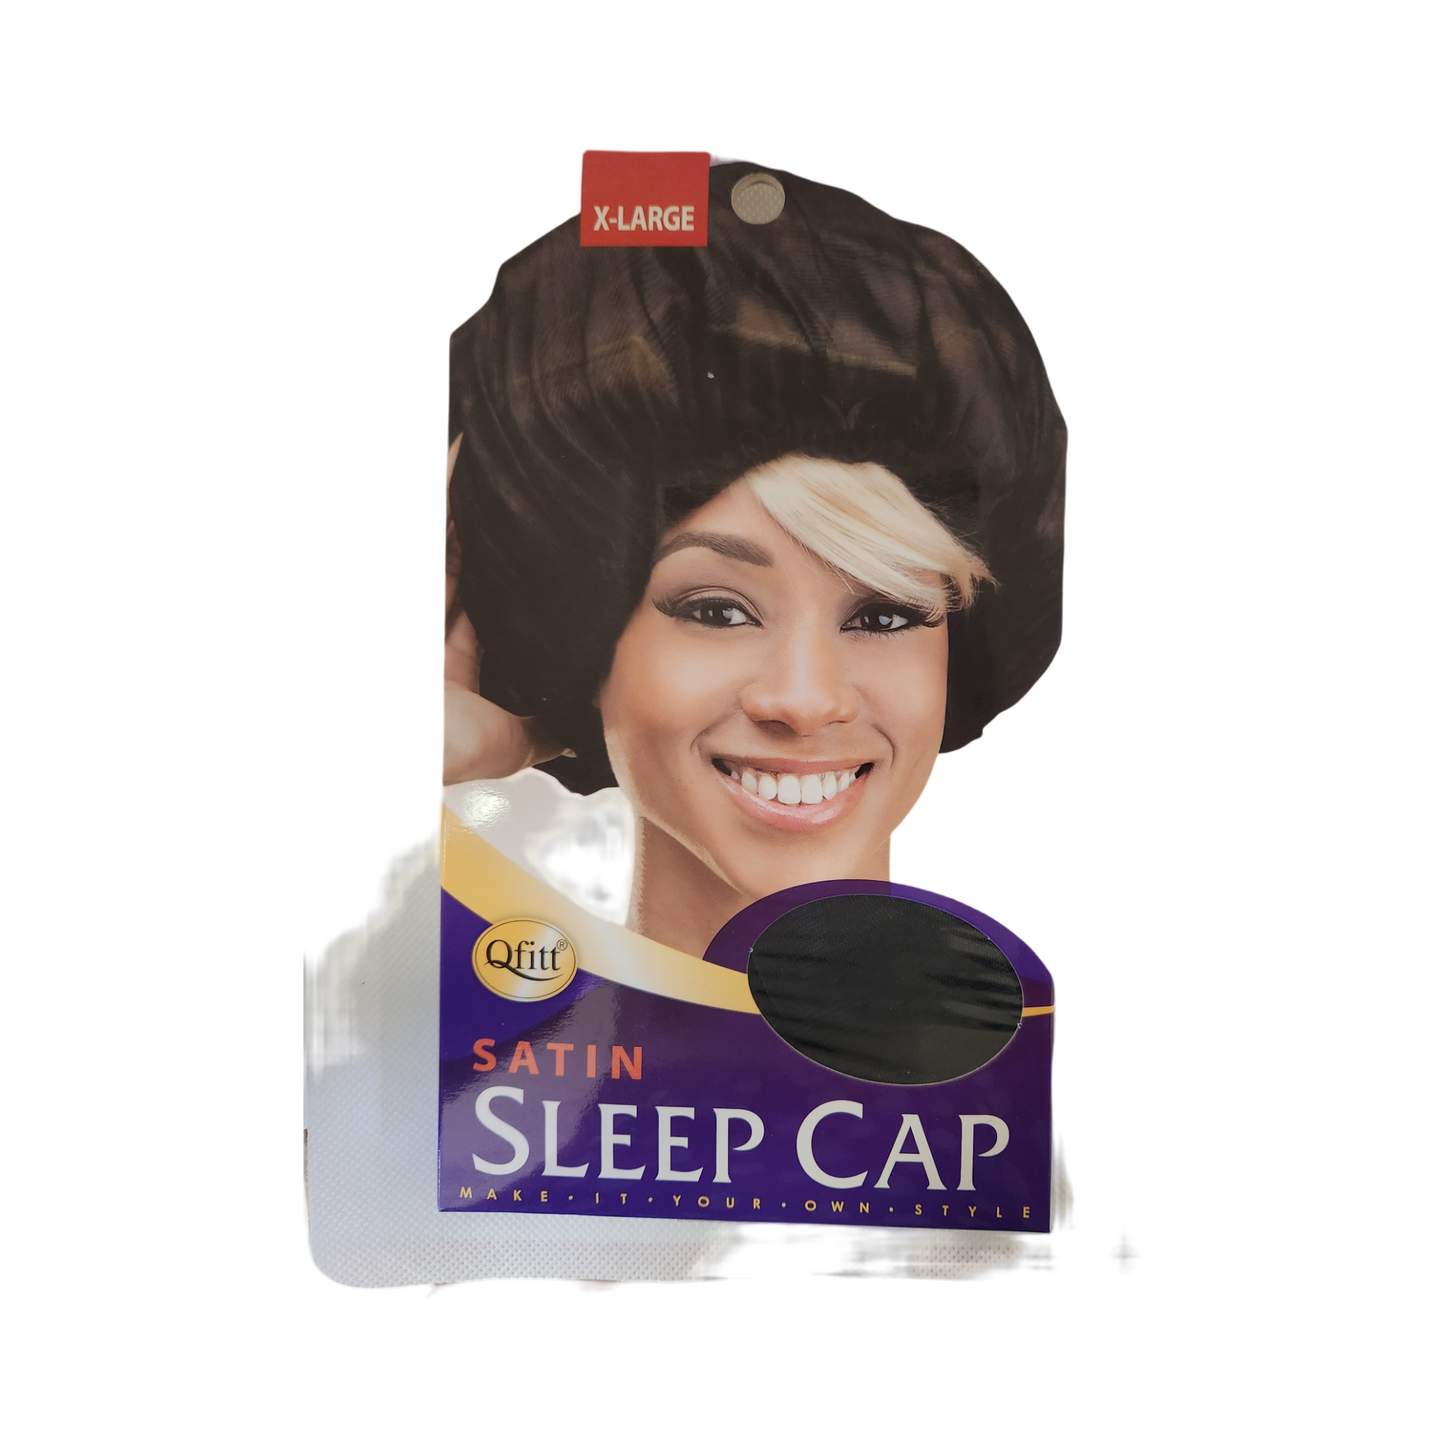 Qfitt Satin Sleep Cap | X-Large